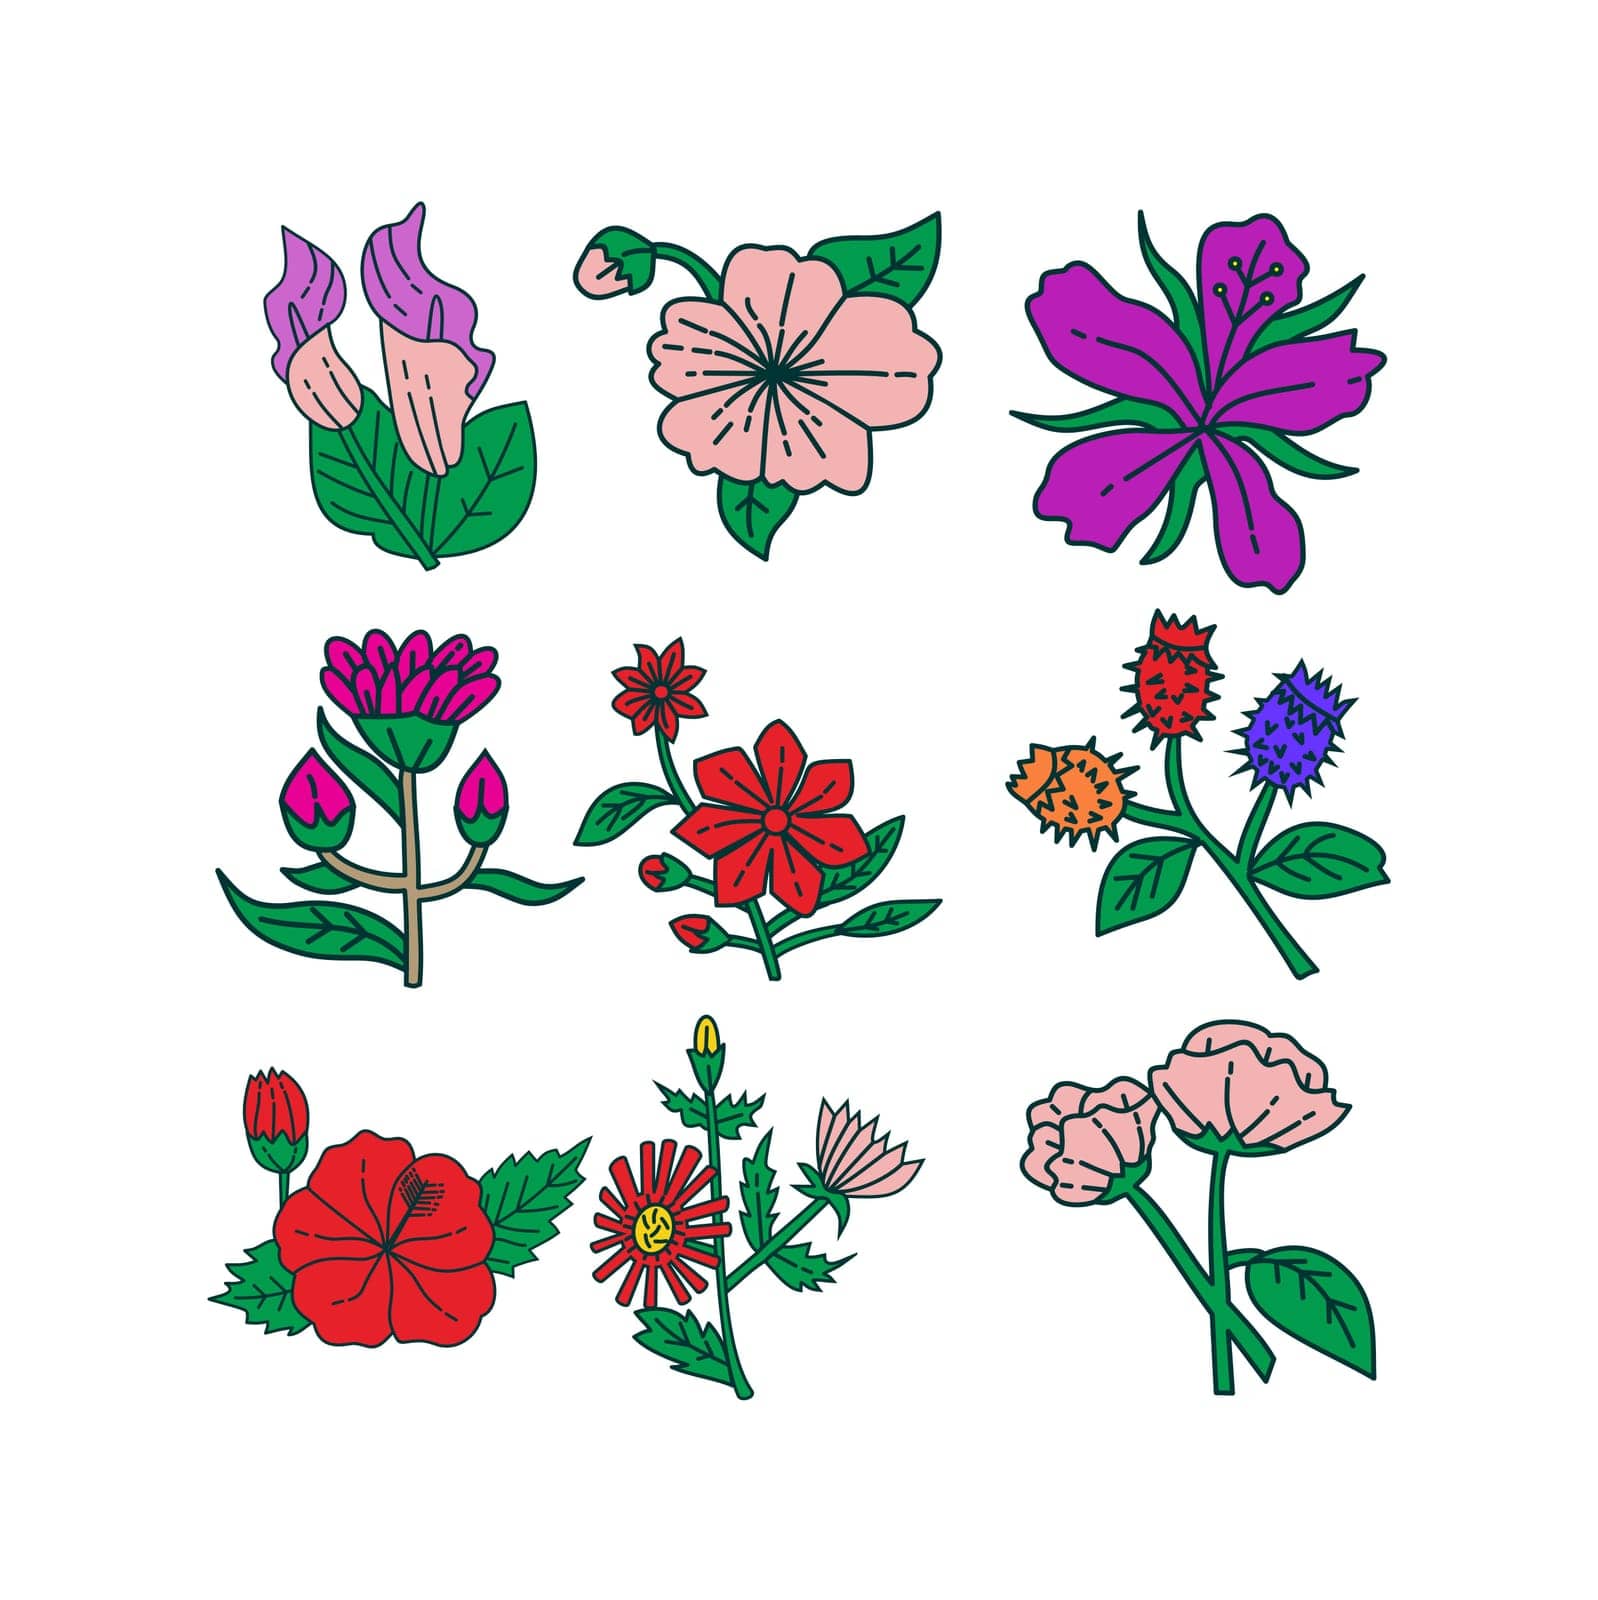 Flower Leaf Illustration Design Template Vector by alluranet